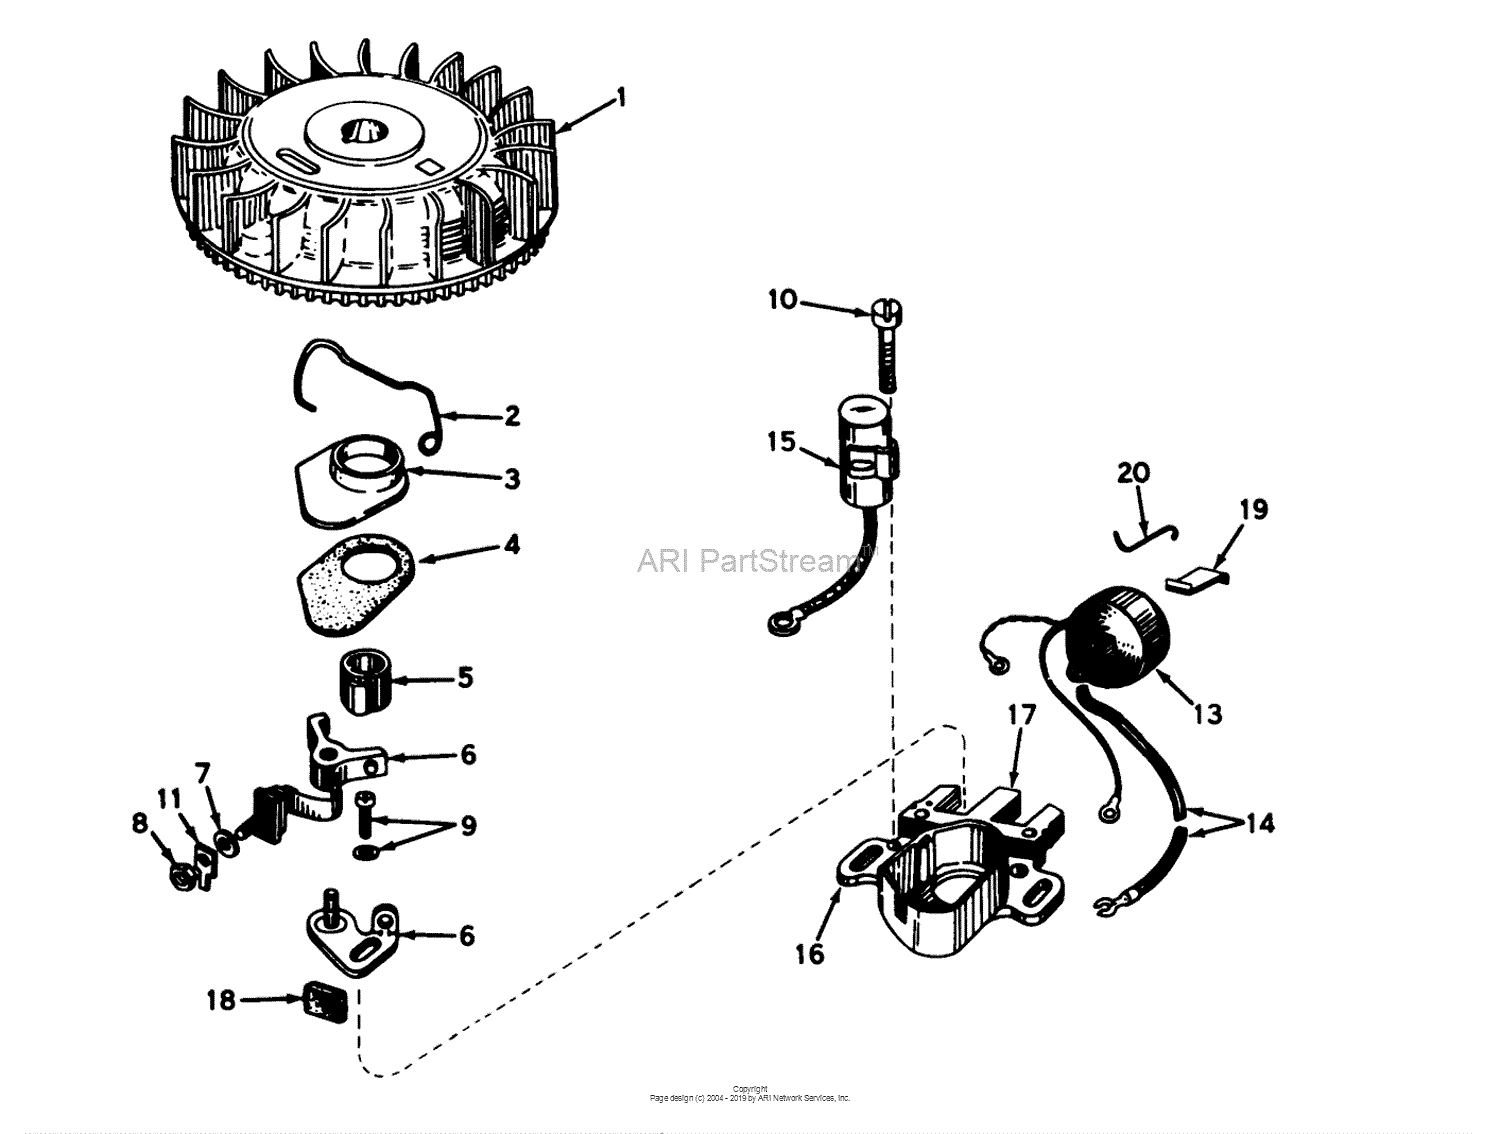 Lawn Mower Magneto Diagram | Online Wiring Diagram toro lawn mower magneto wiring diagram 